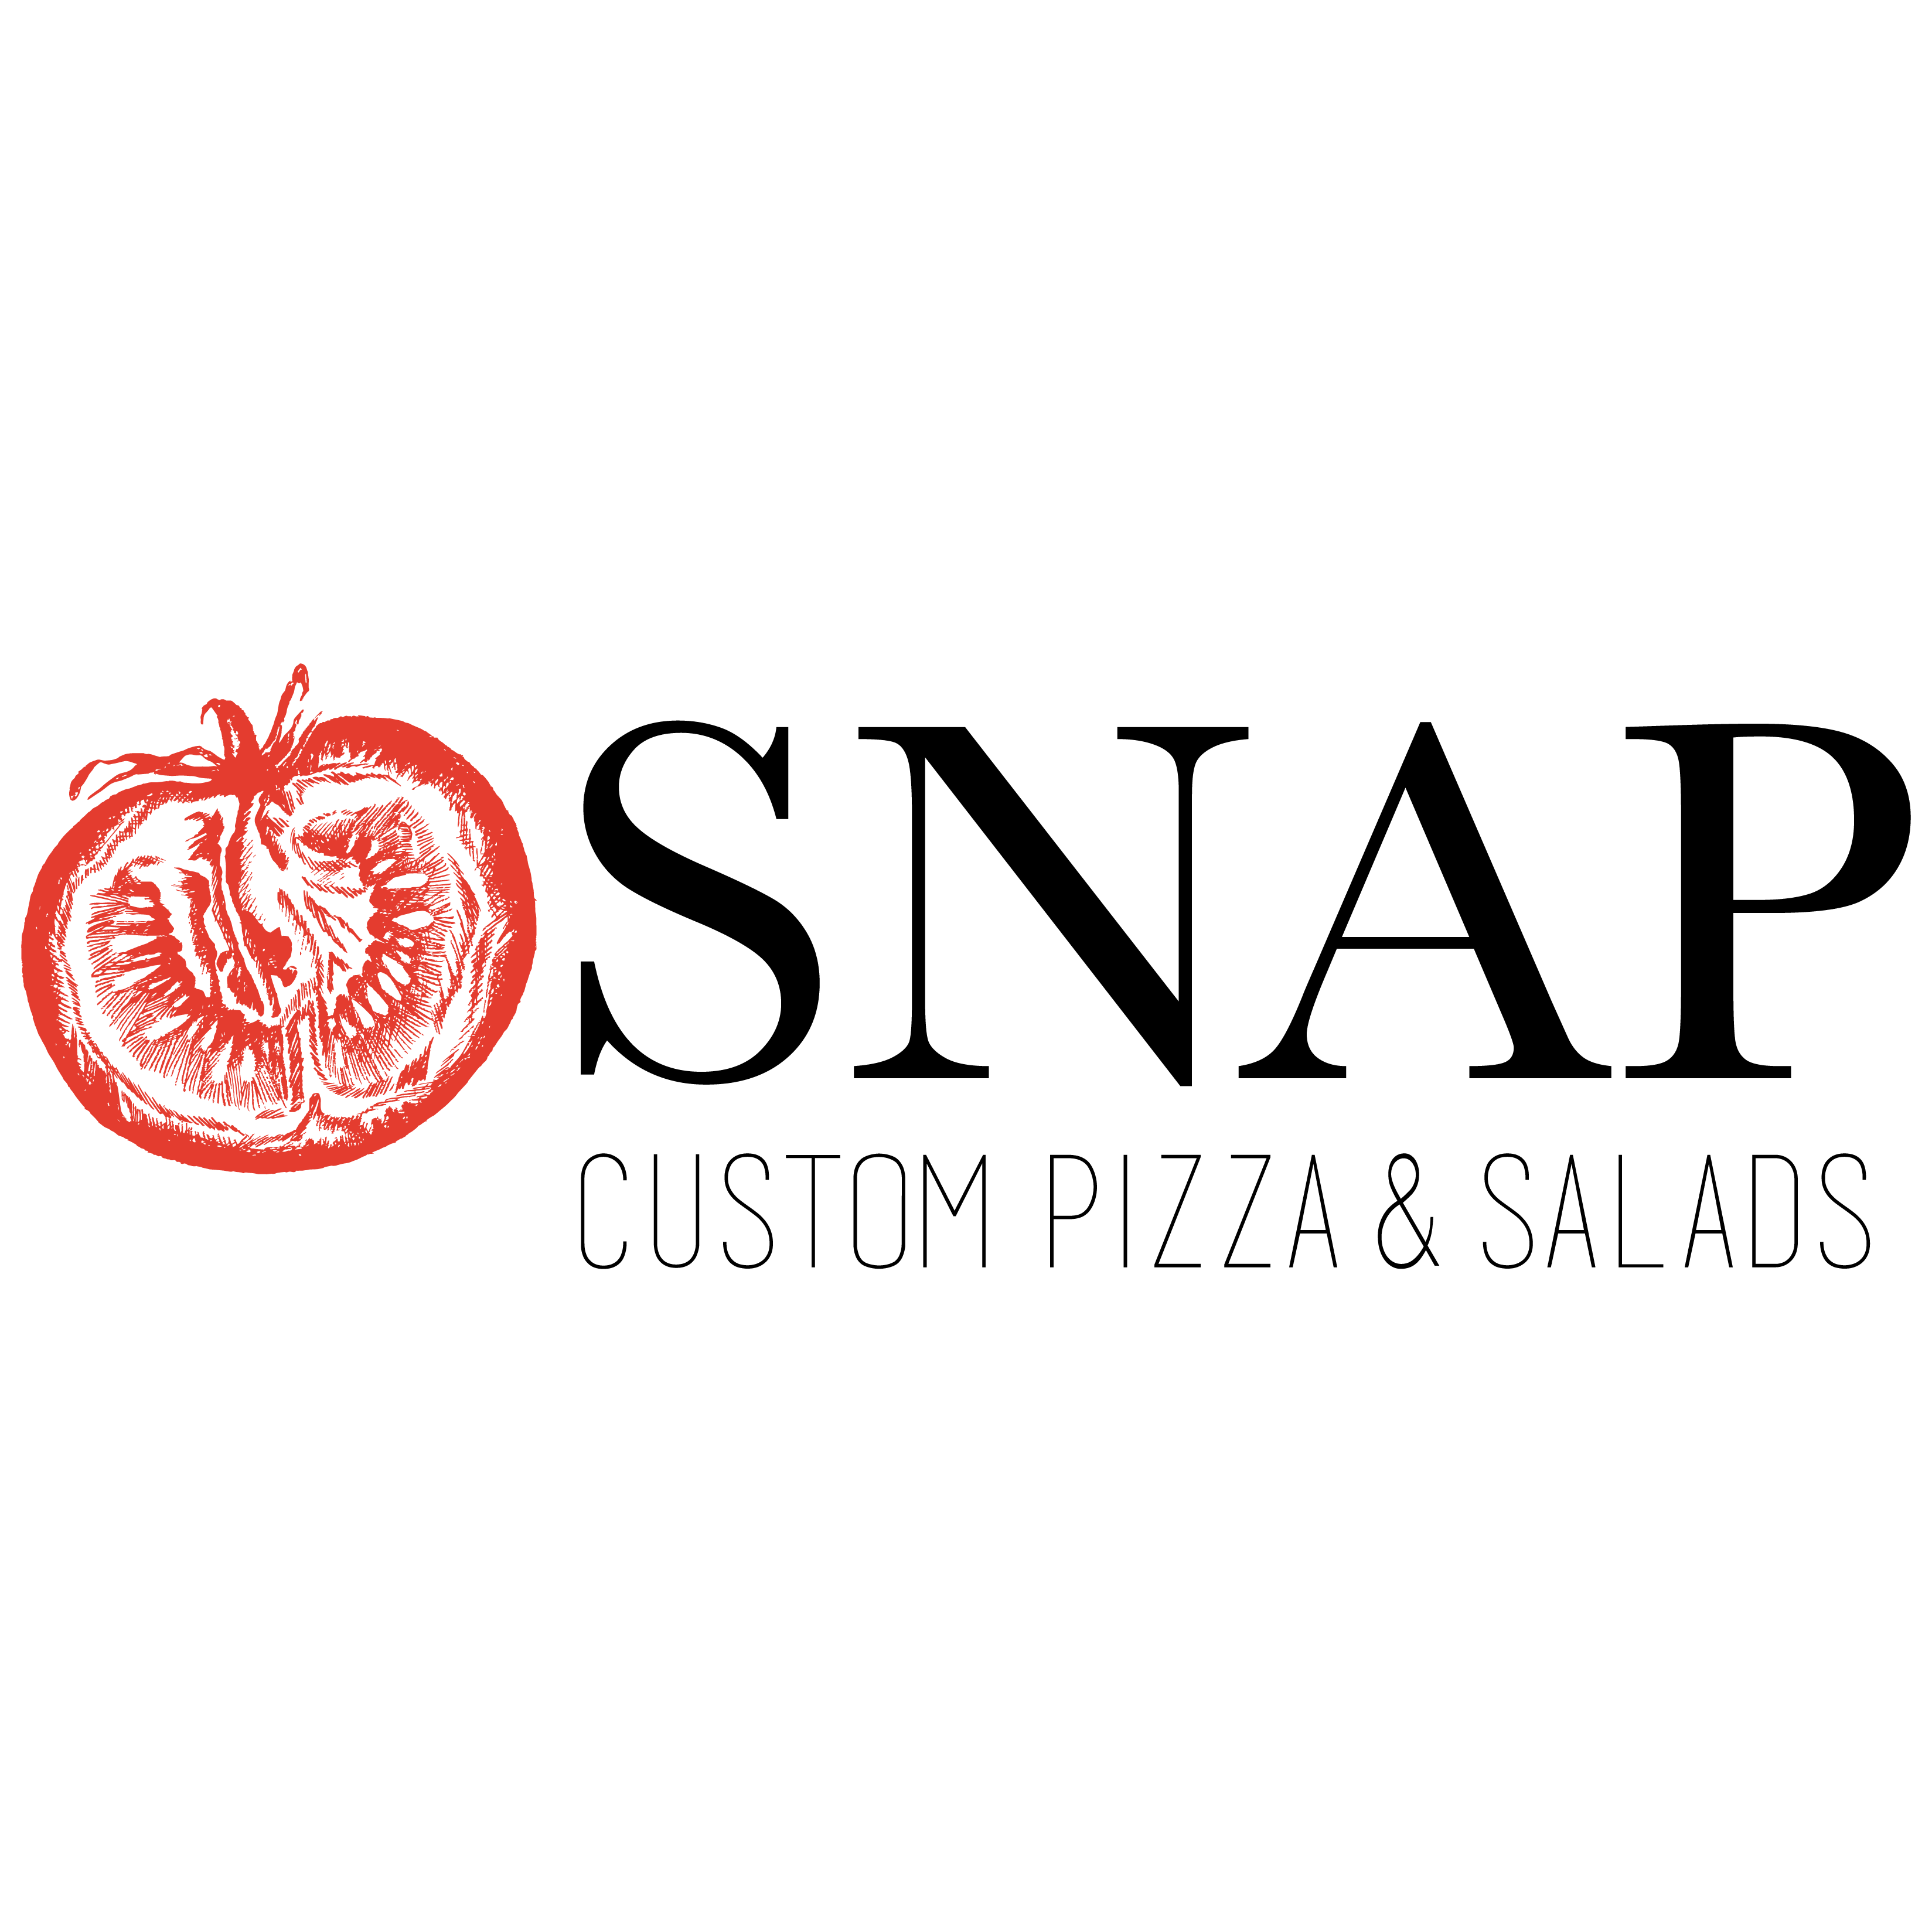 snap custom pizza & salads app logo